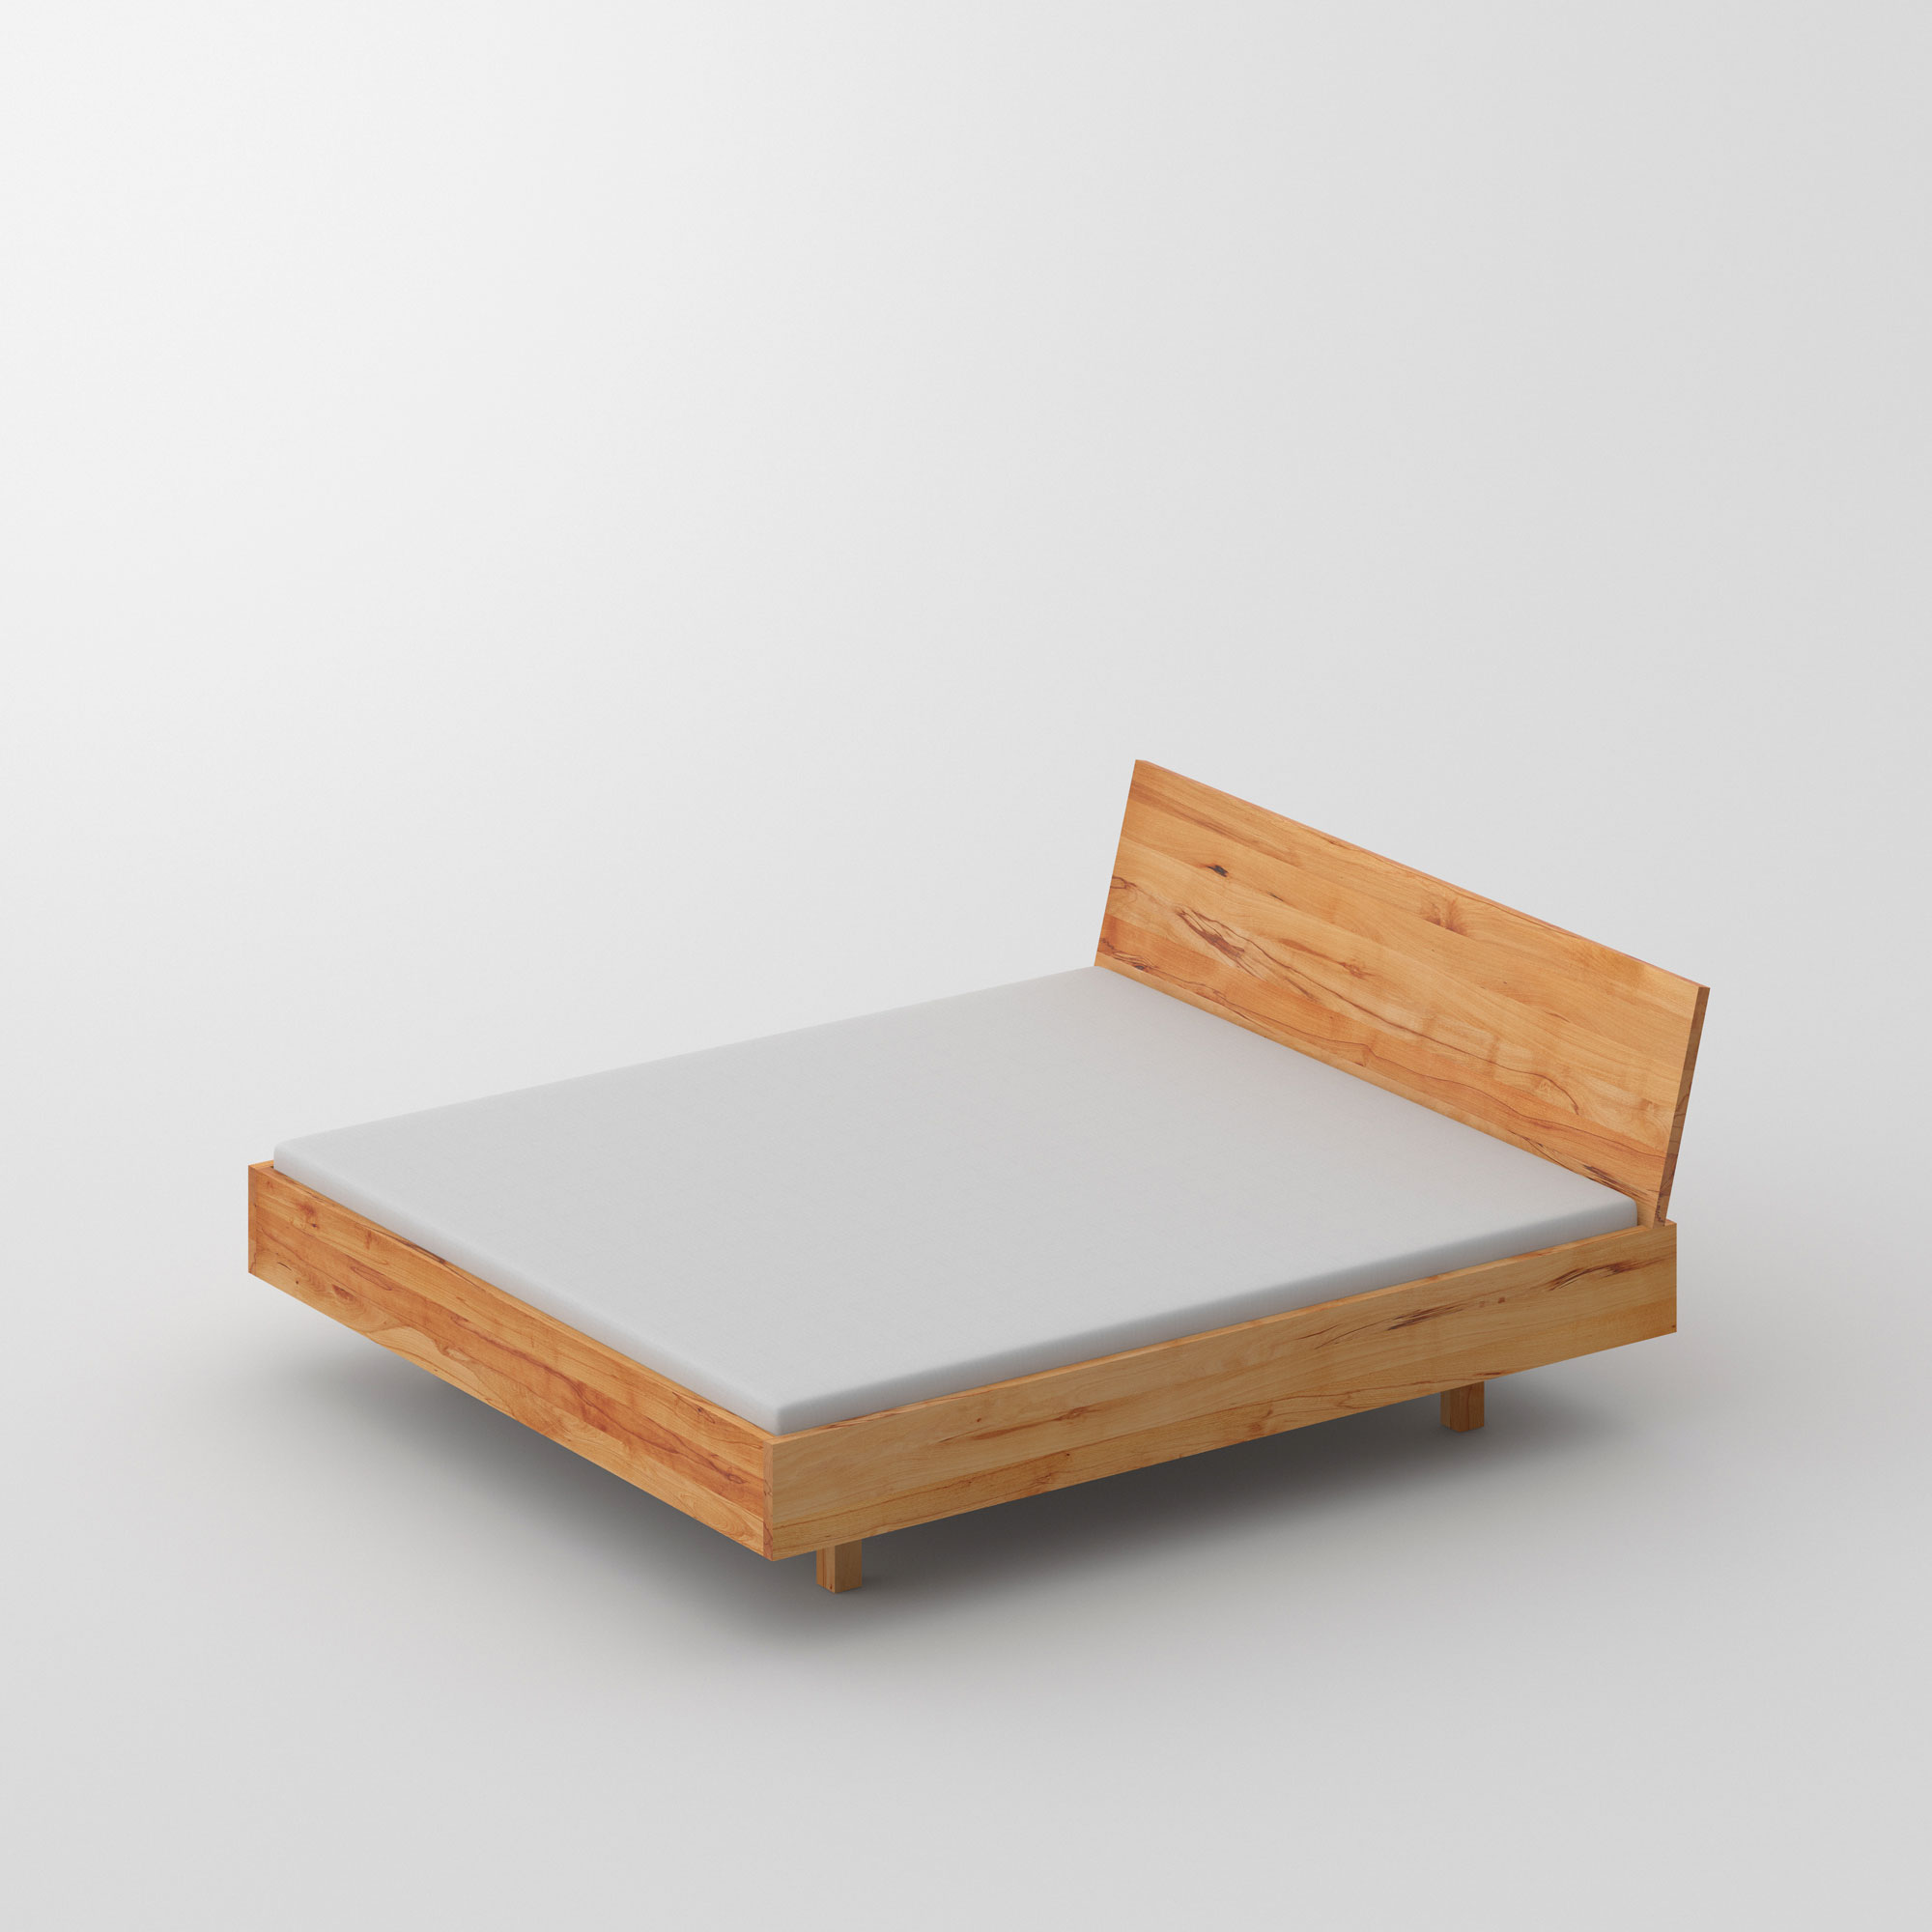 Design Bed QUADRA cam1 custom made in solid wood by vitamin design